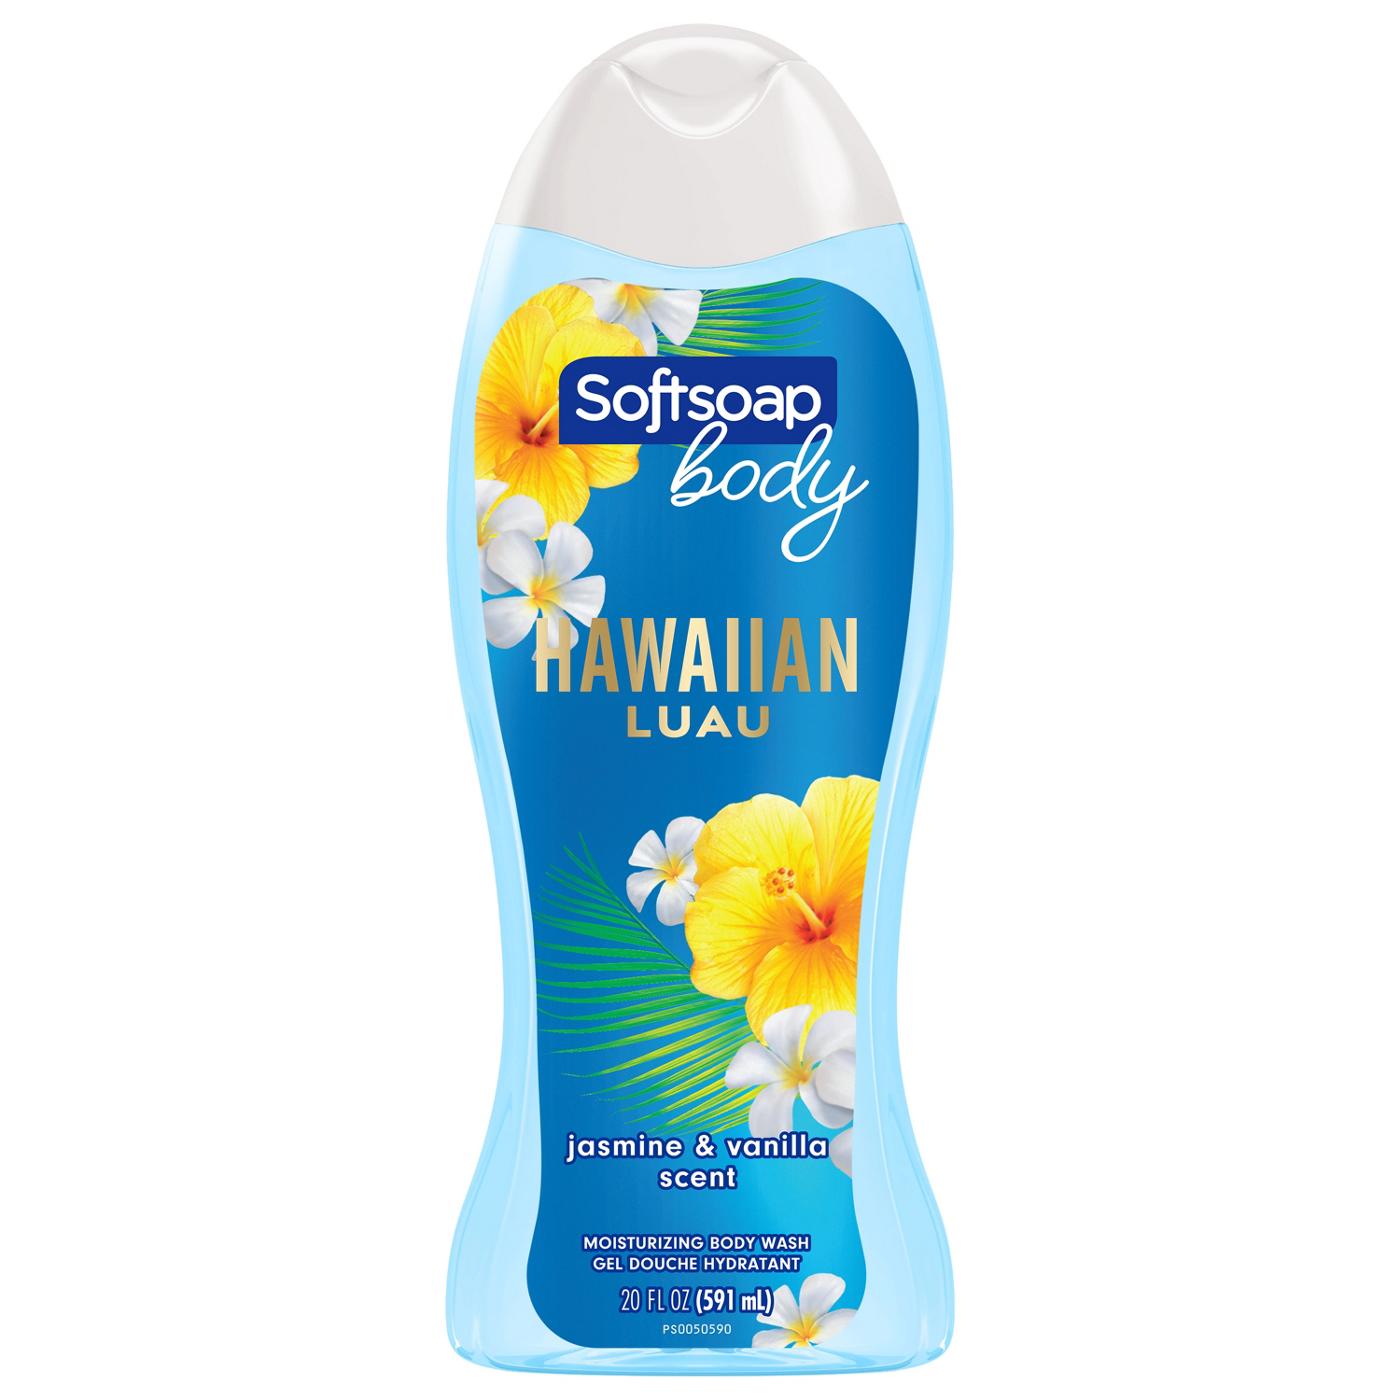 Softsoap Body Wash Hawaiian Luau - Jasmine & Vanilla Scent; image 1 of 3